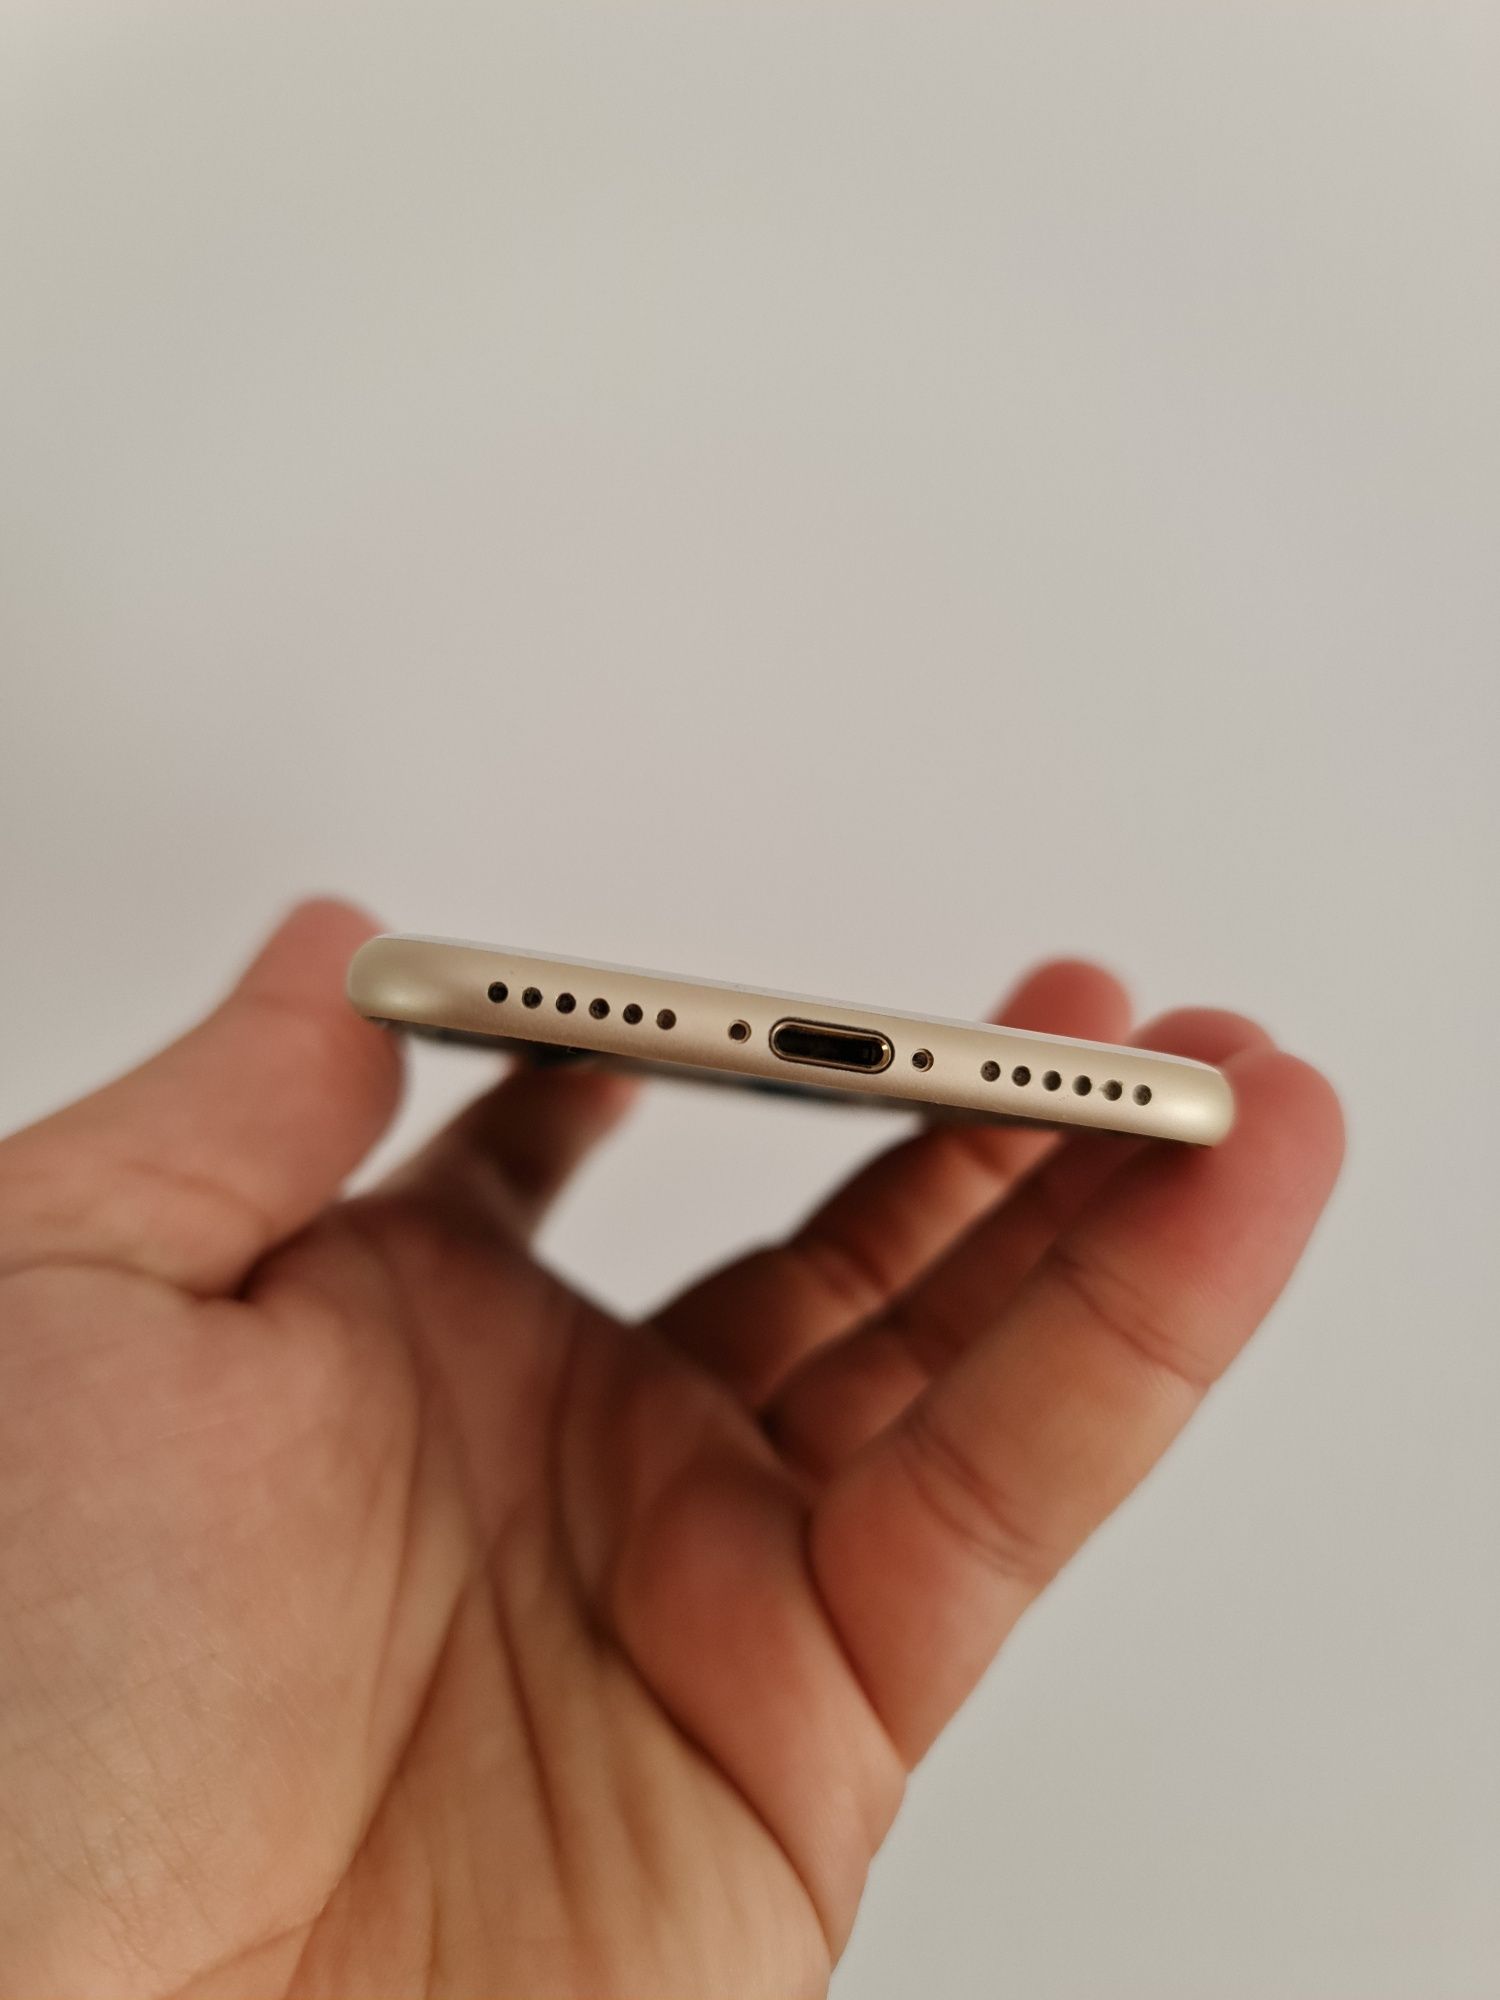 Piese Apple iPhone 7 gold: carcasa, camera fata, mufa, buton amprenta